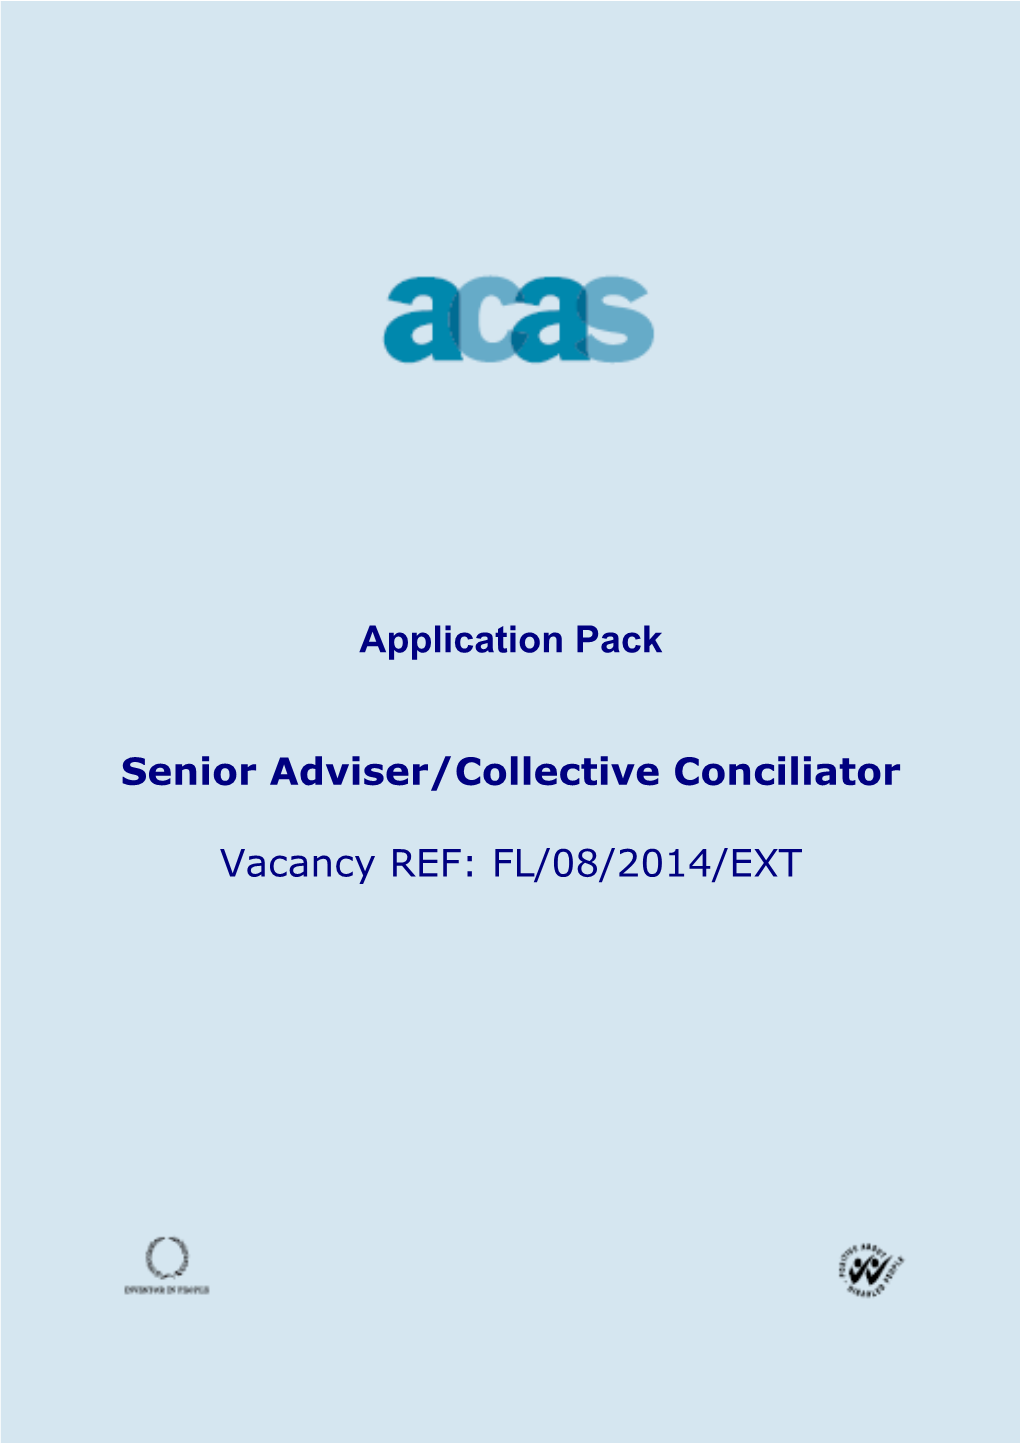 Senior Adviser/Collective Conciliator